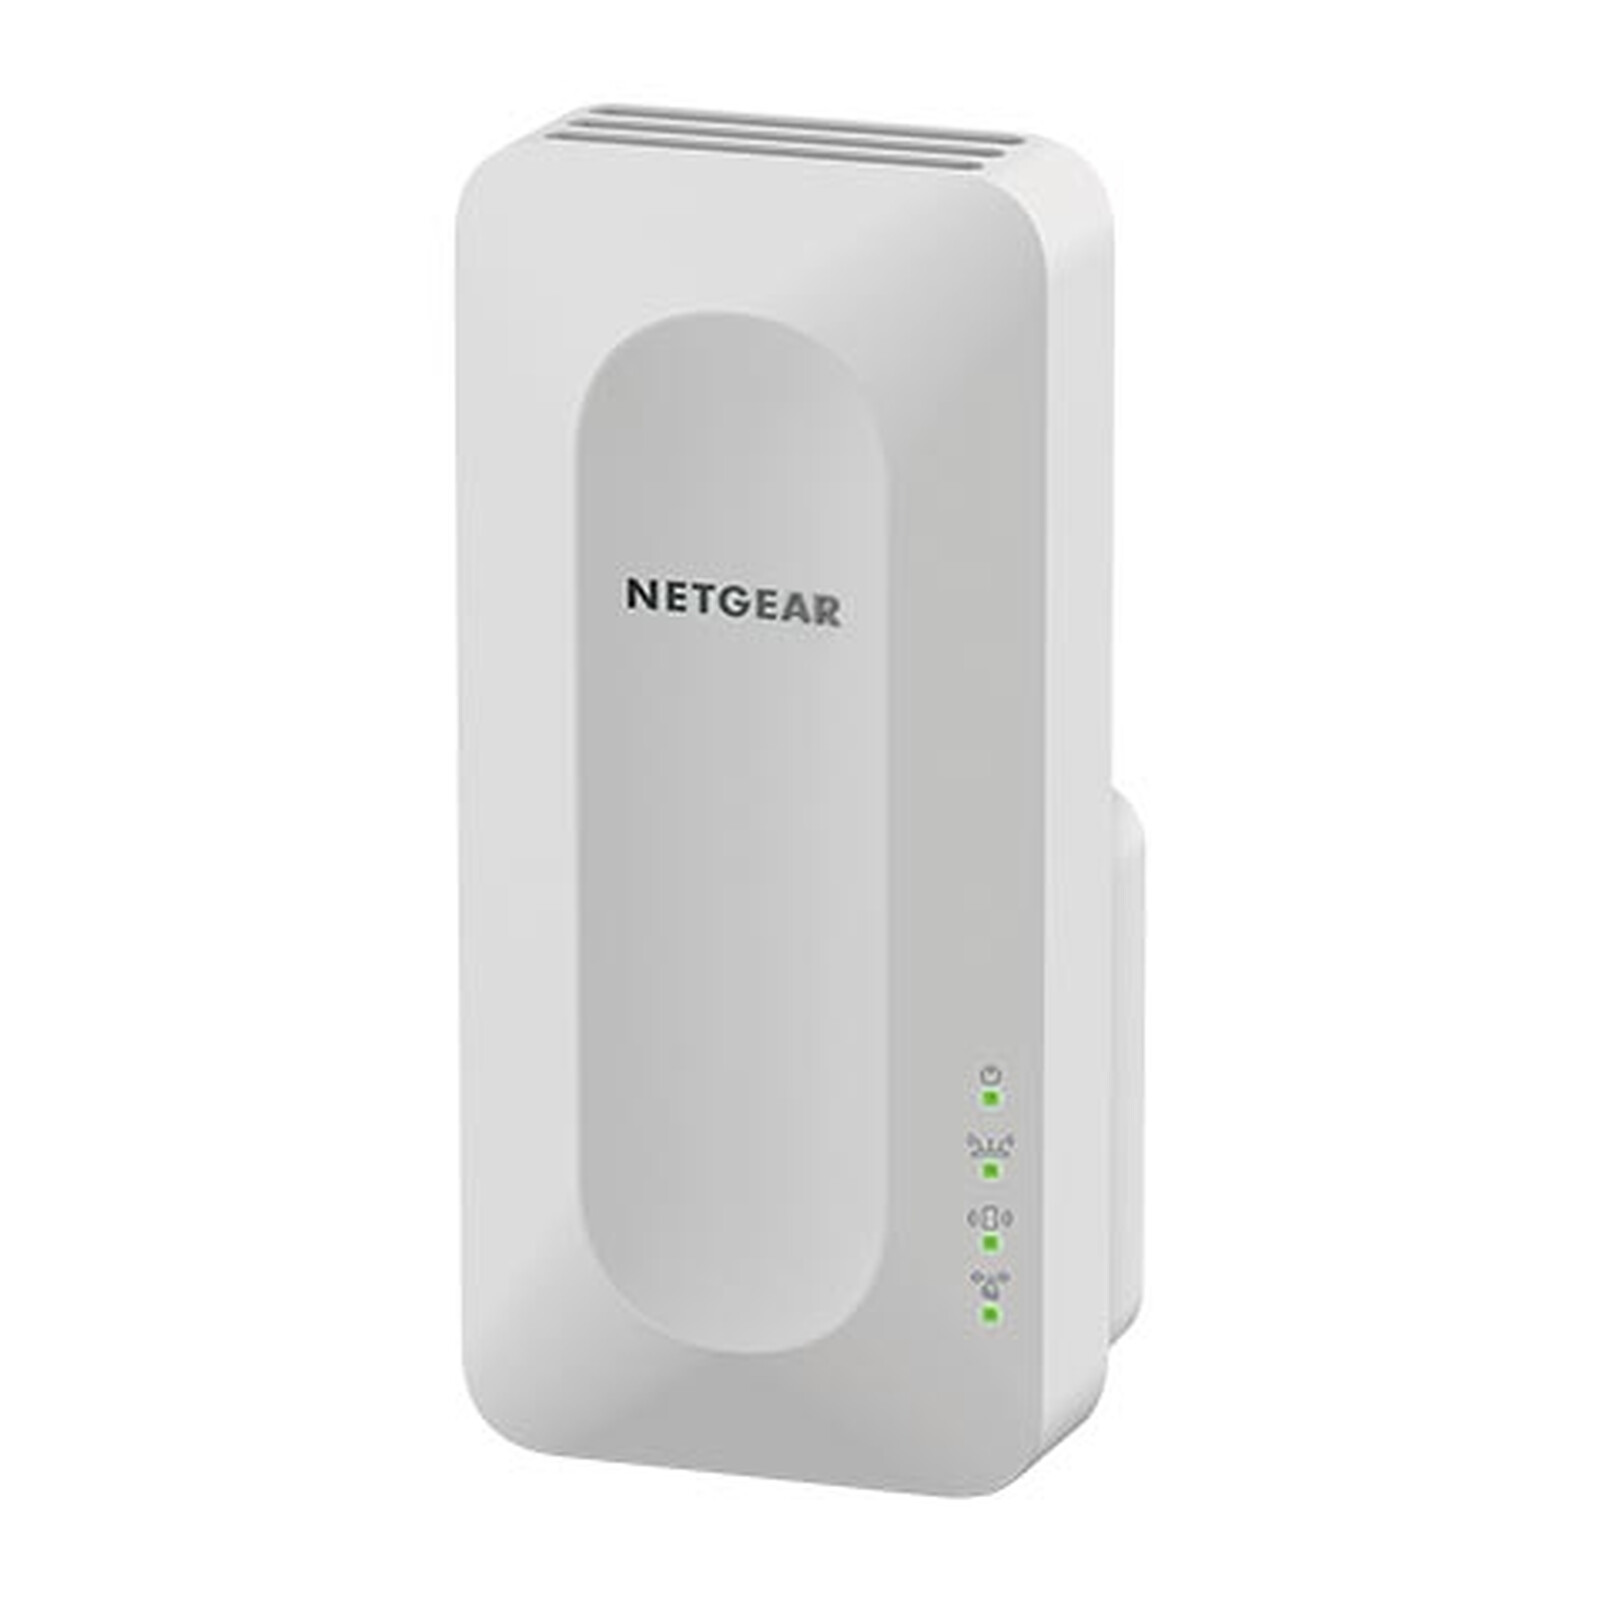 Netgear AX1800 WiFi Mesh Extender (EAX15) - Ripetitore Wi-Fi - Garanzia 3  anni LDLC